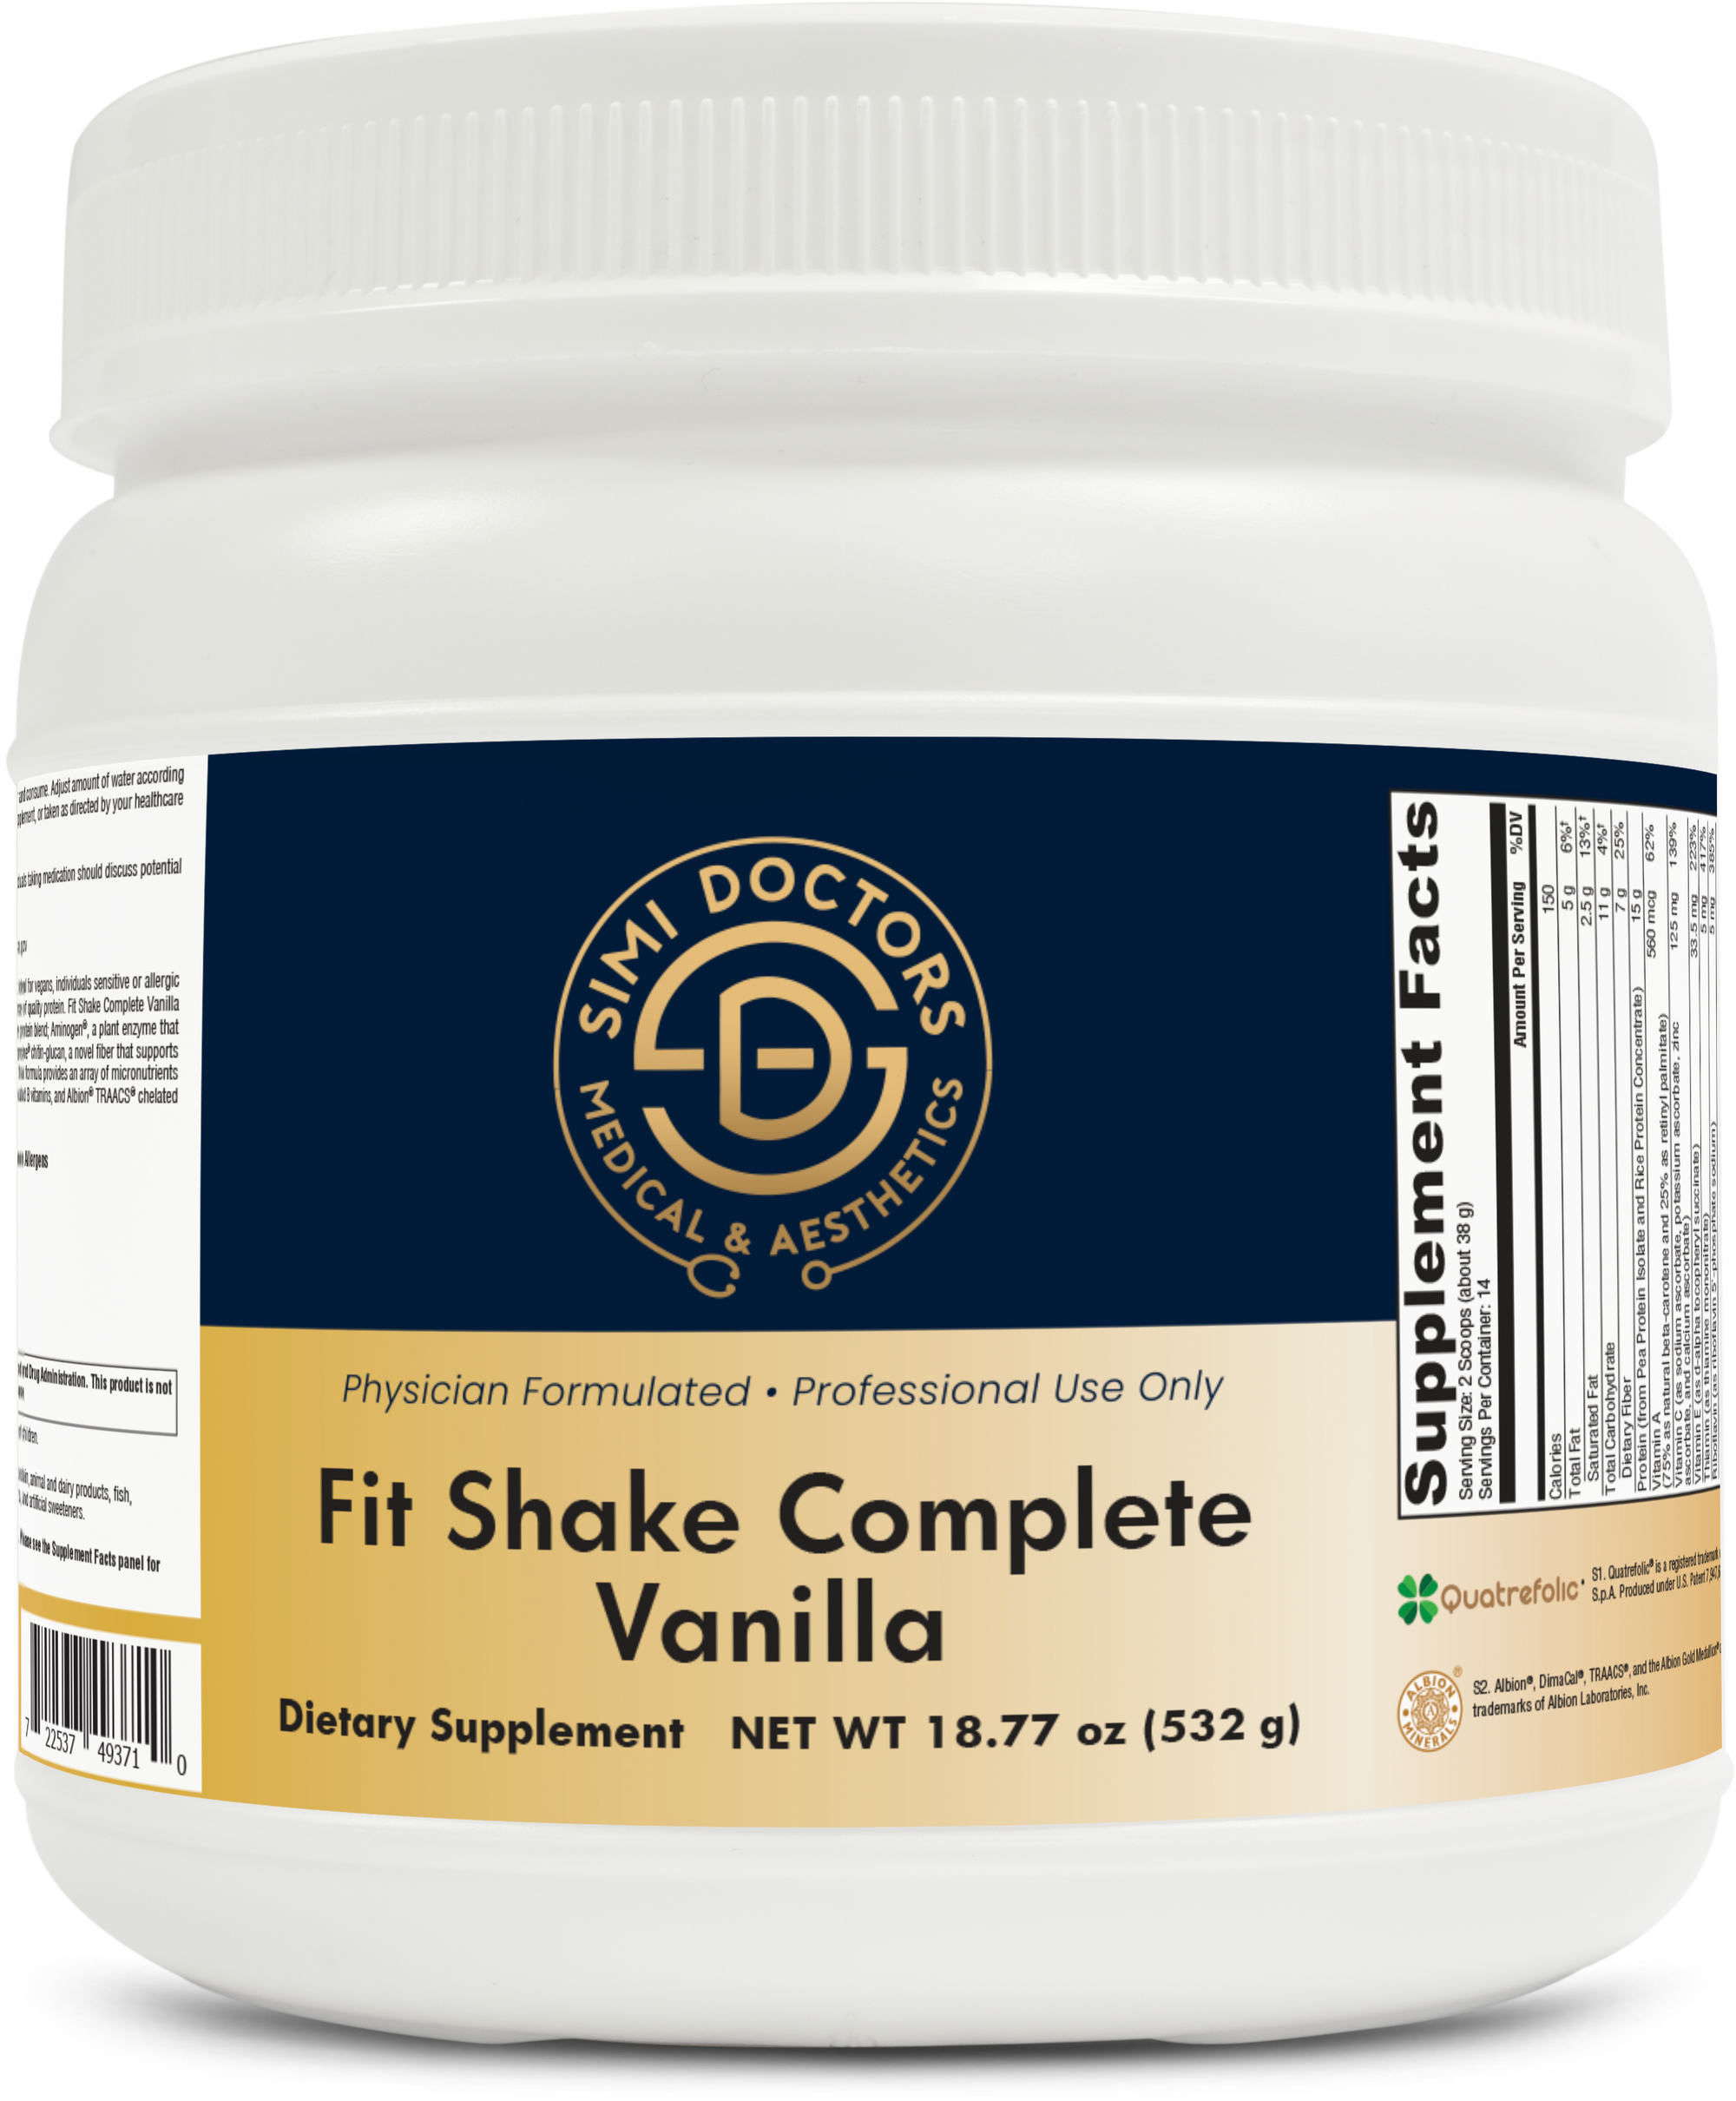 Fit Shake Complete (Vanilla)